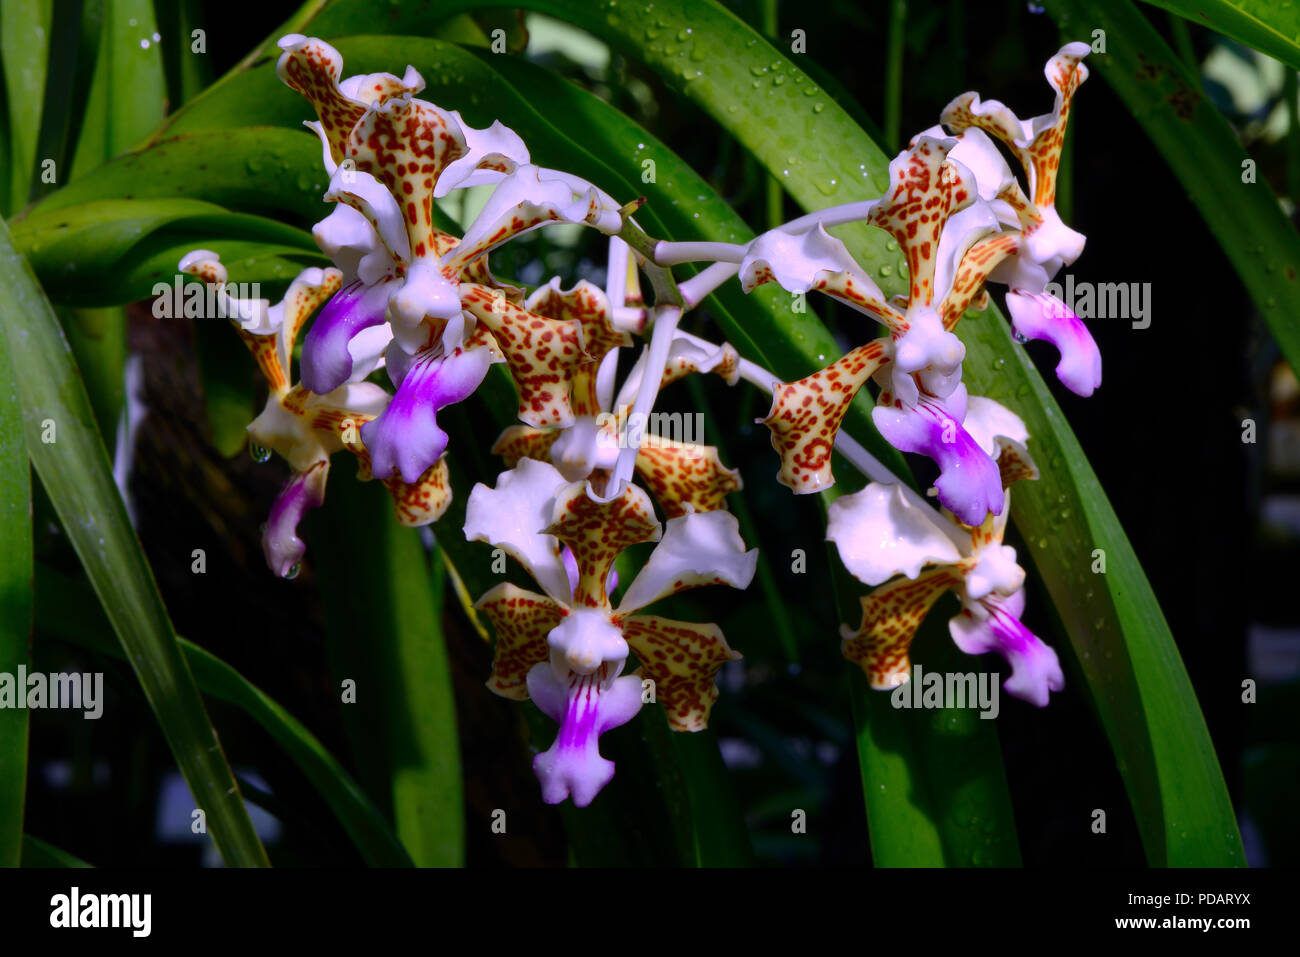 Orchidee, dreifarbige Vanda Vanda tricolore Suedostasien Vorkommen Foto Stock